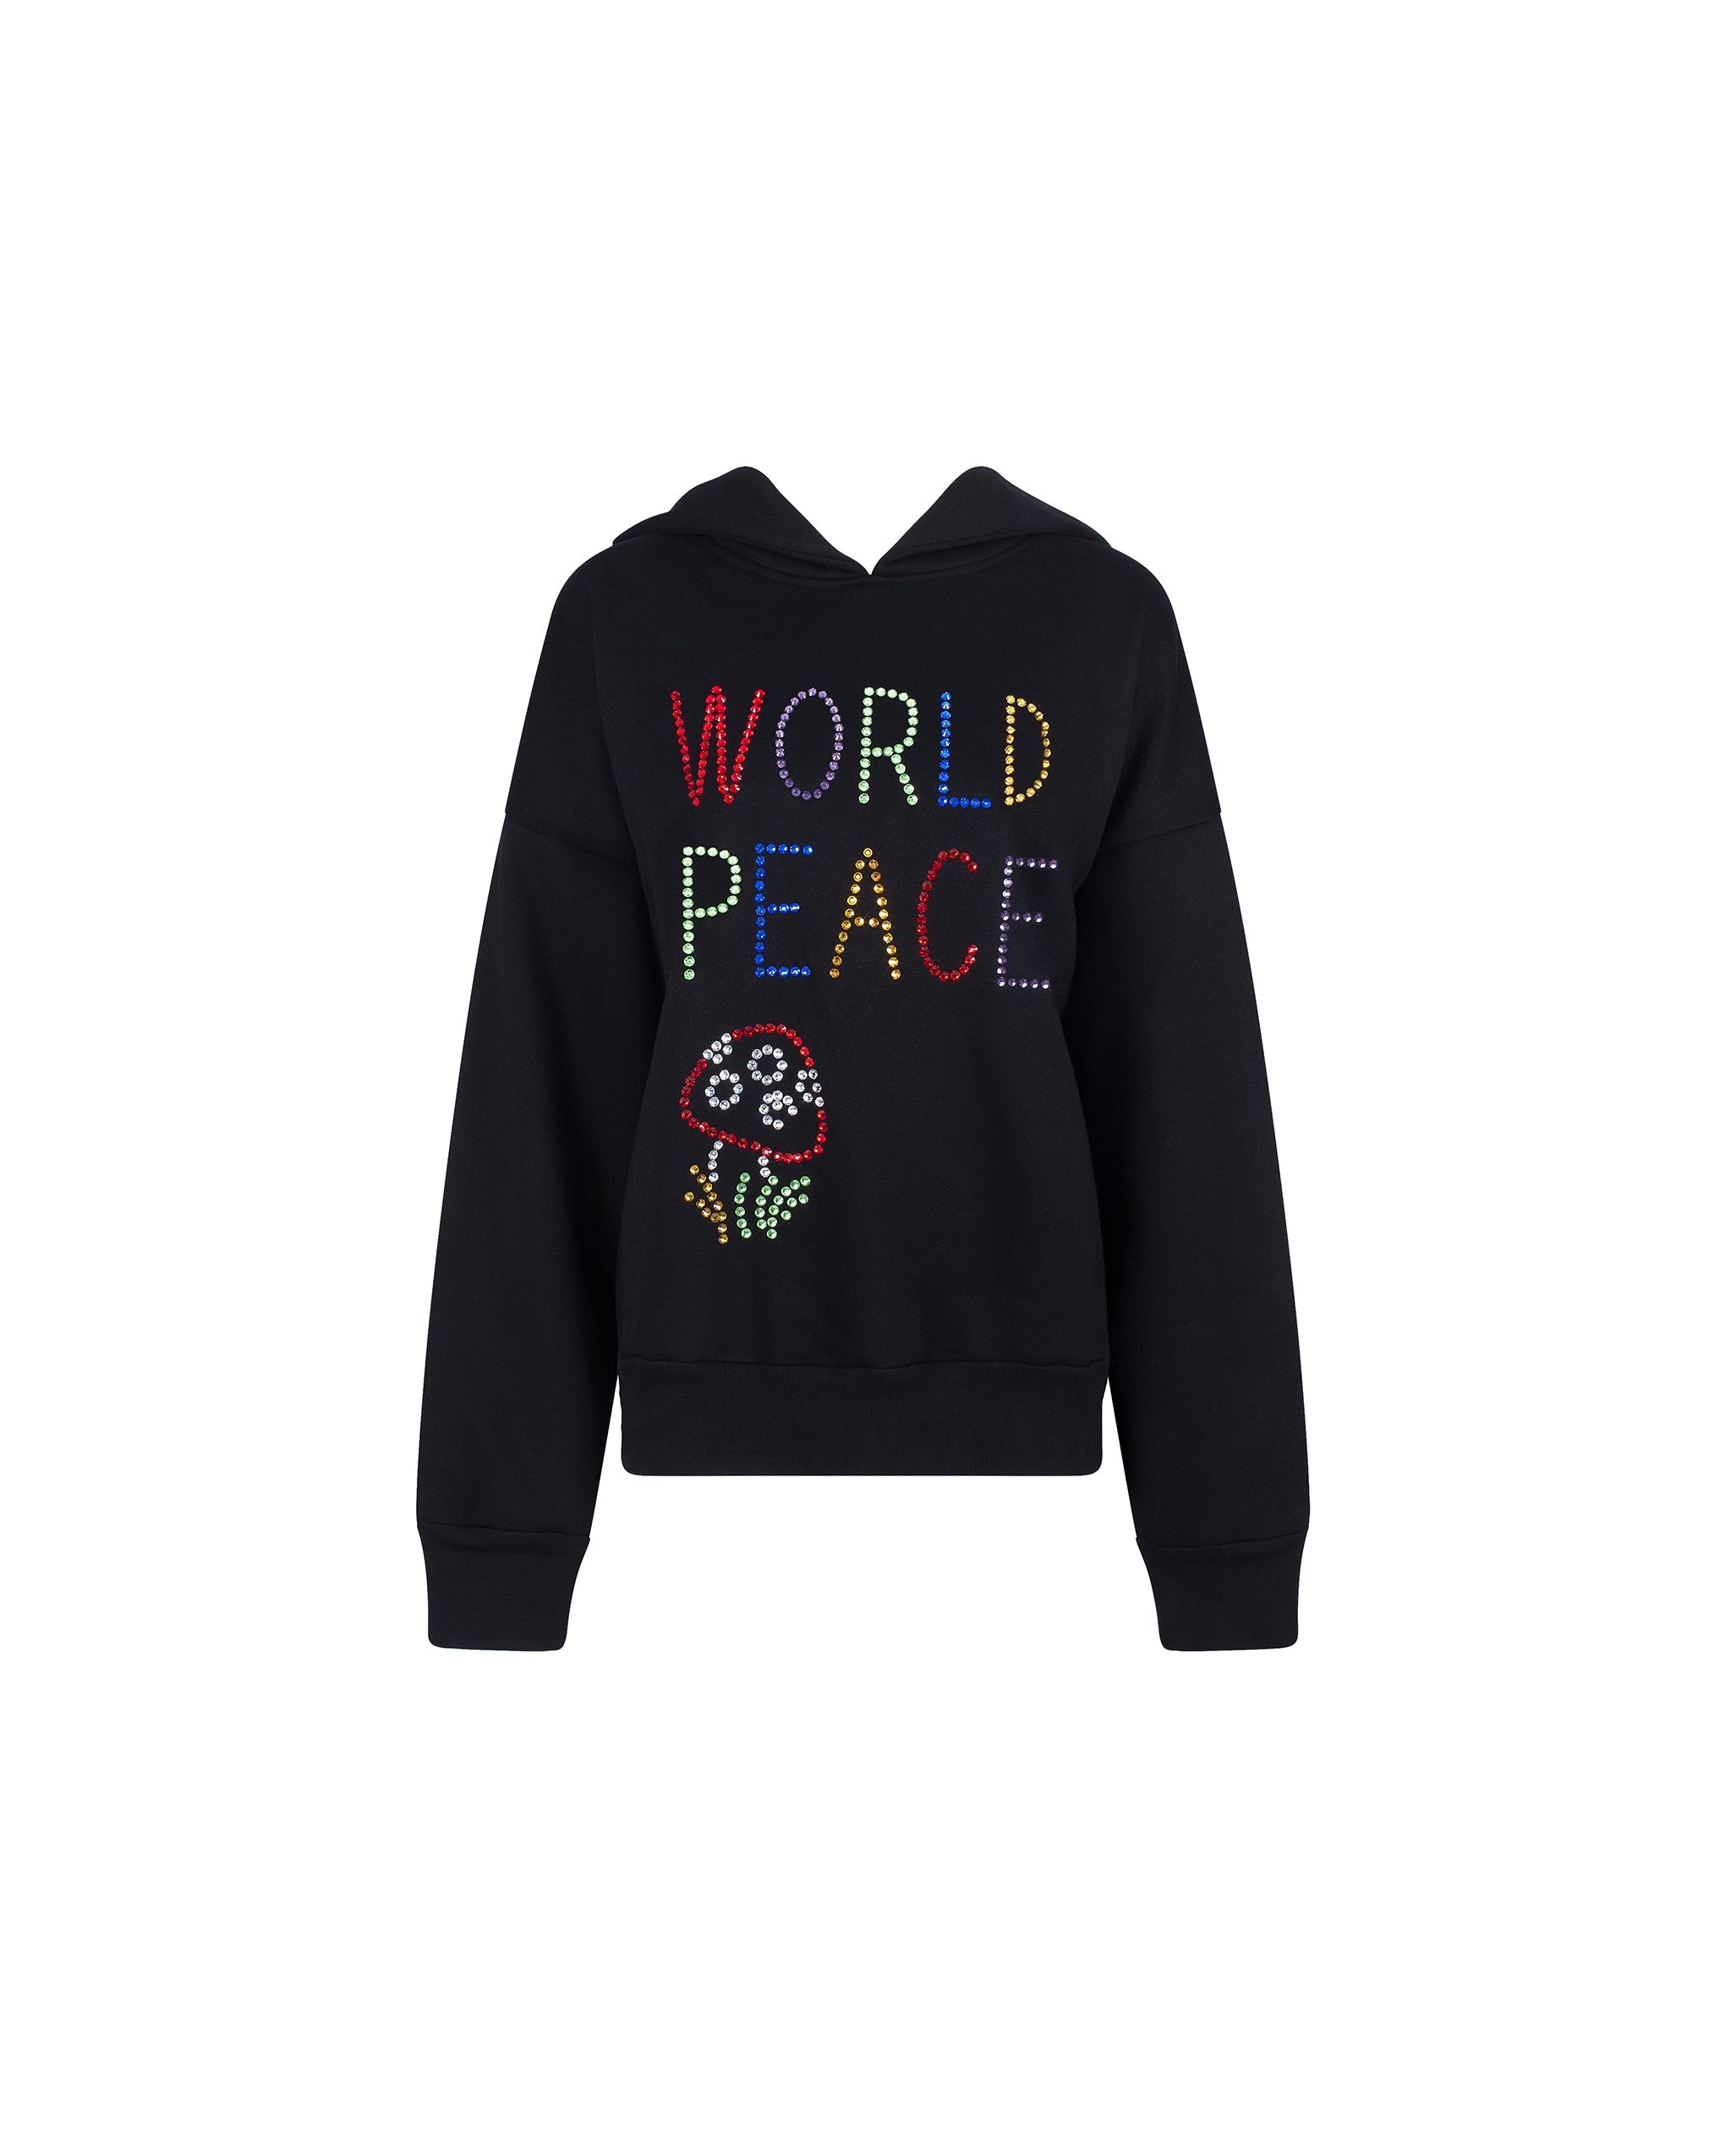 bb x ashish world peace hoodie